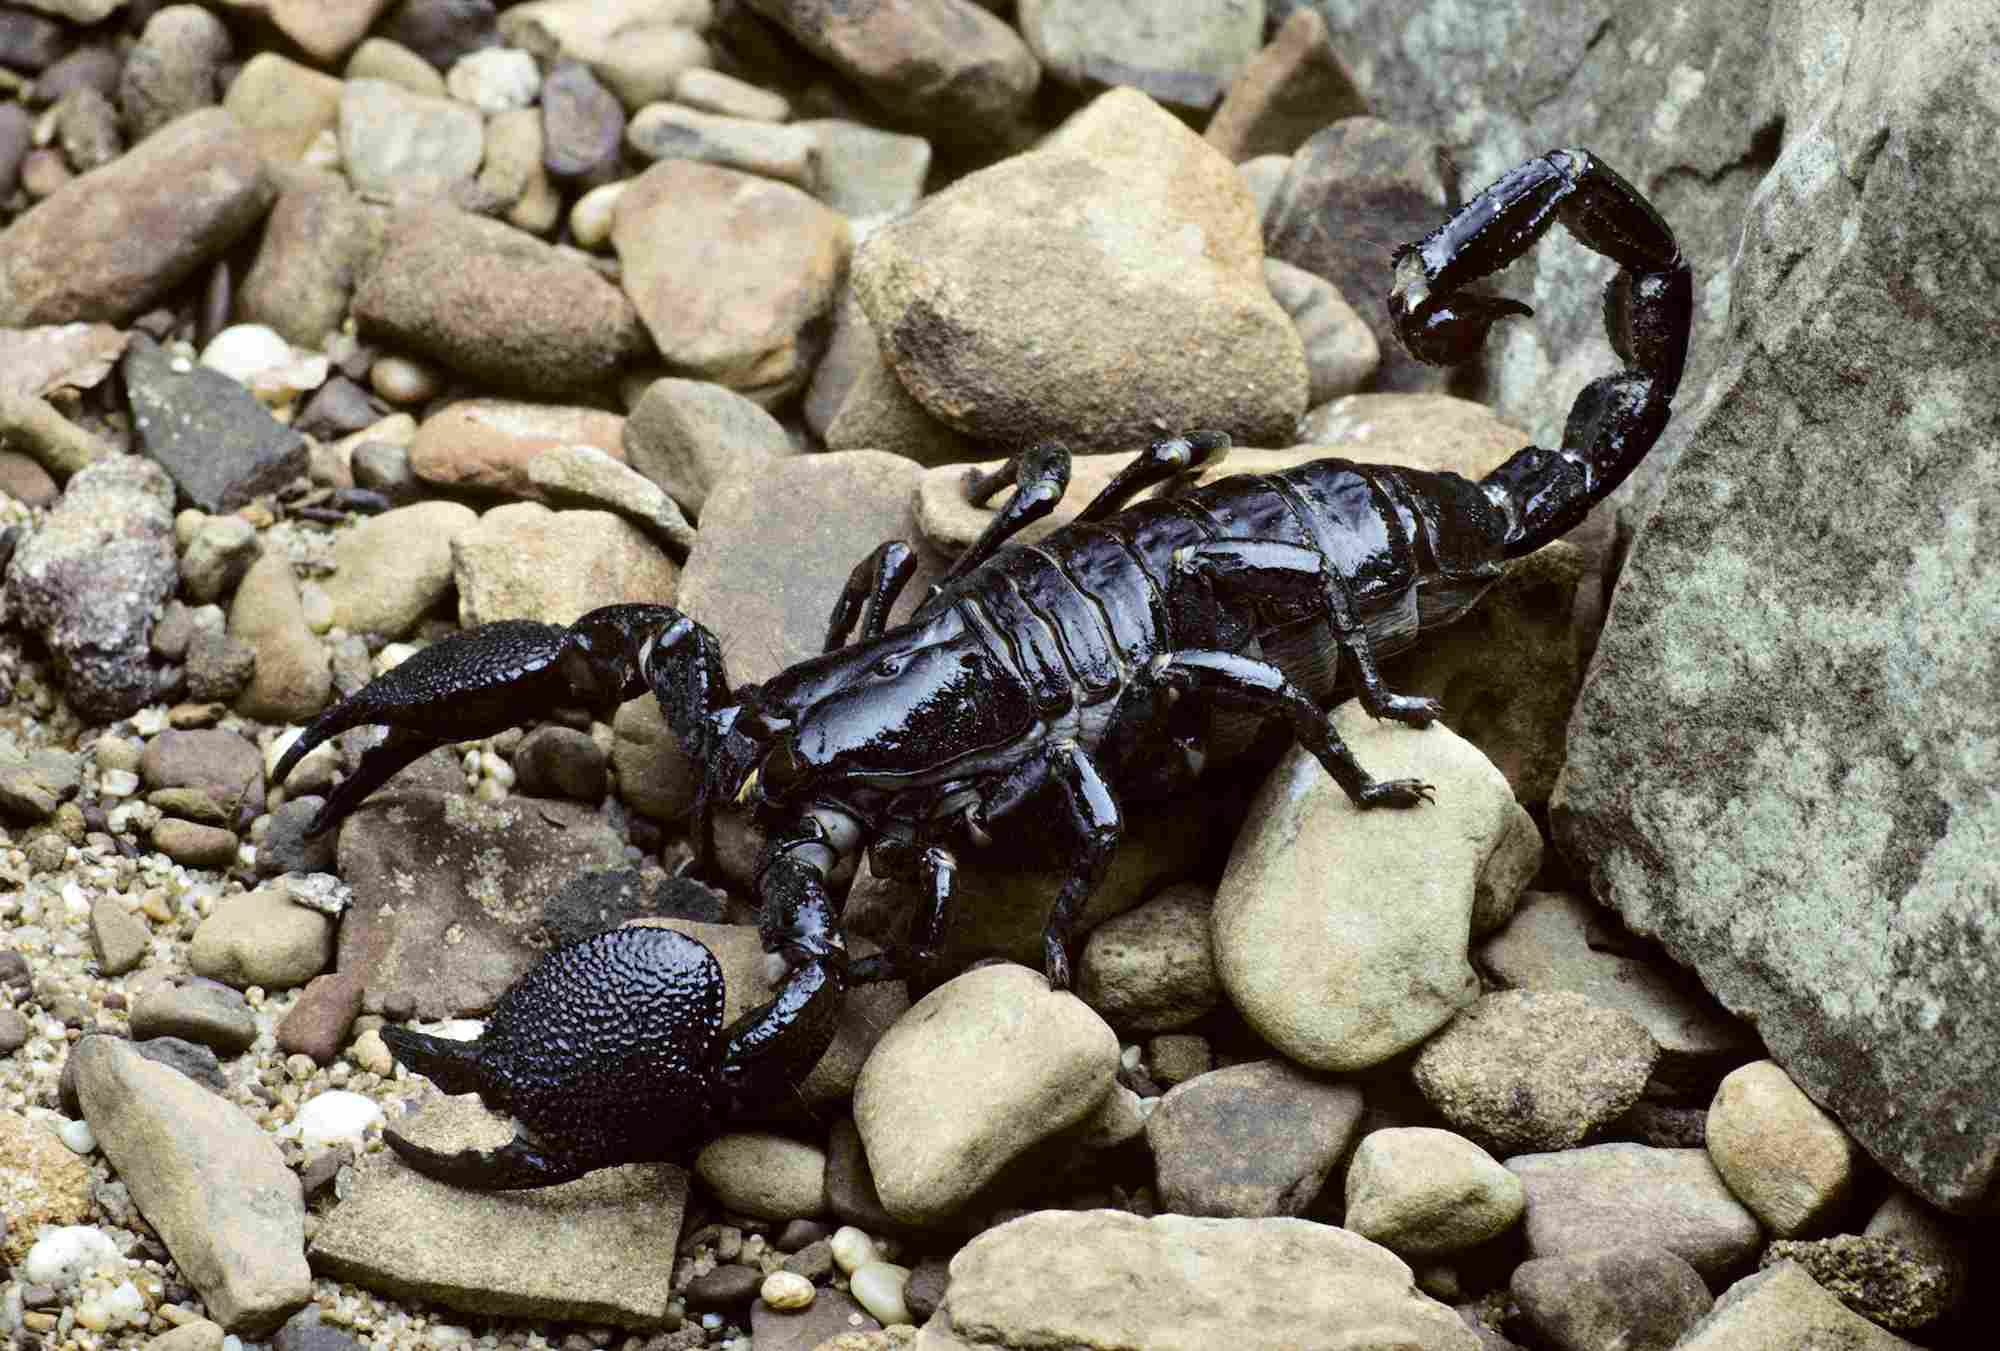 Emperor scorpion on rocks